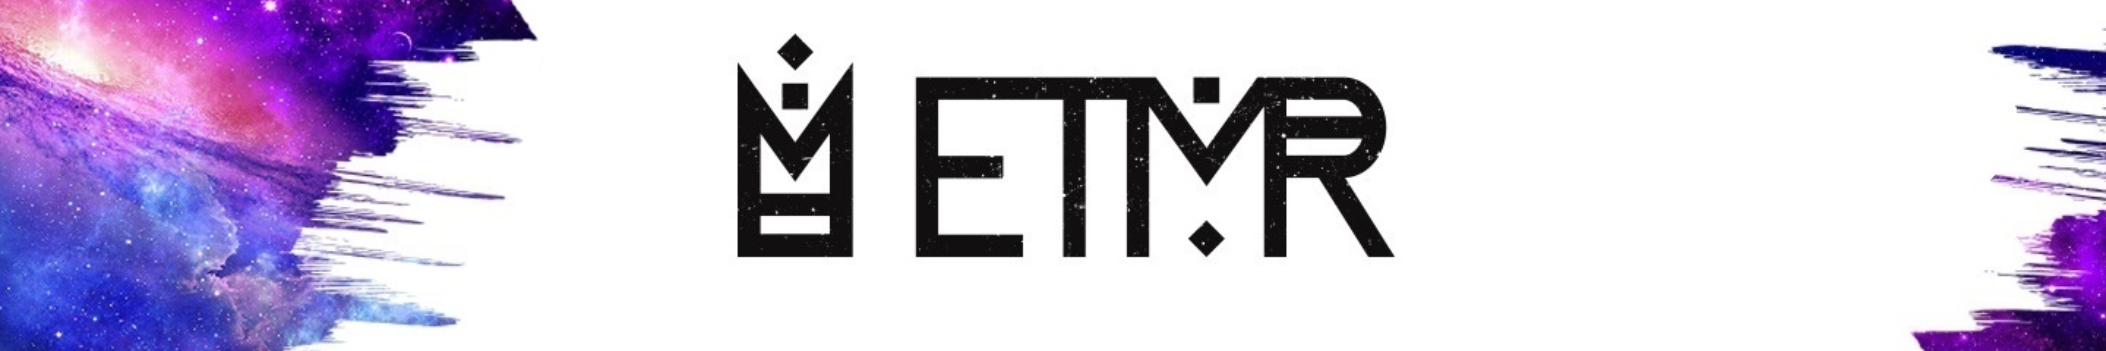 ETMR Official